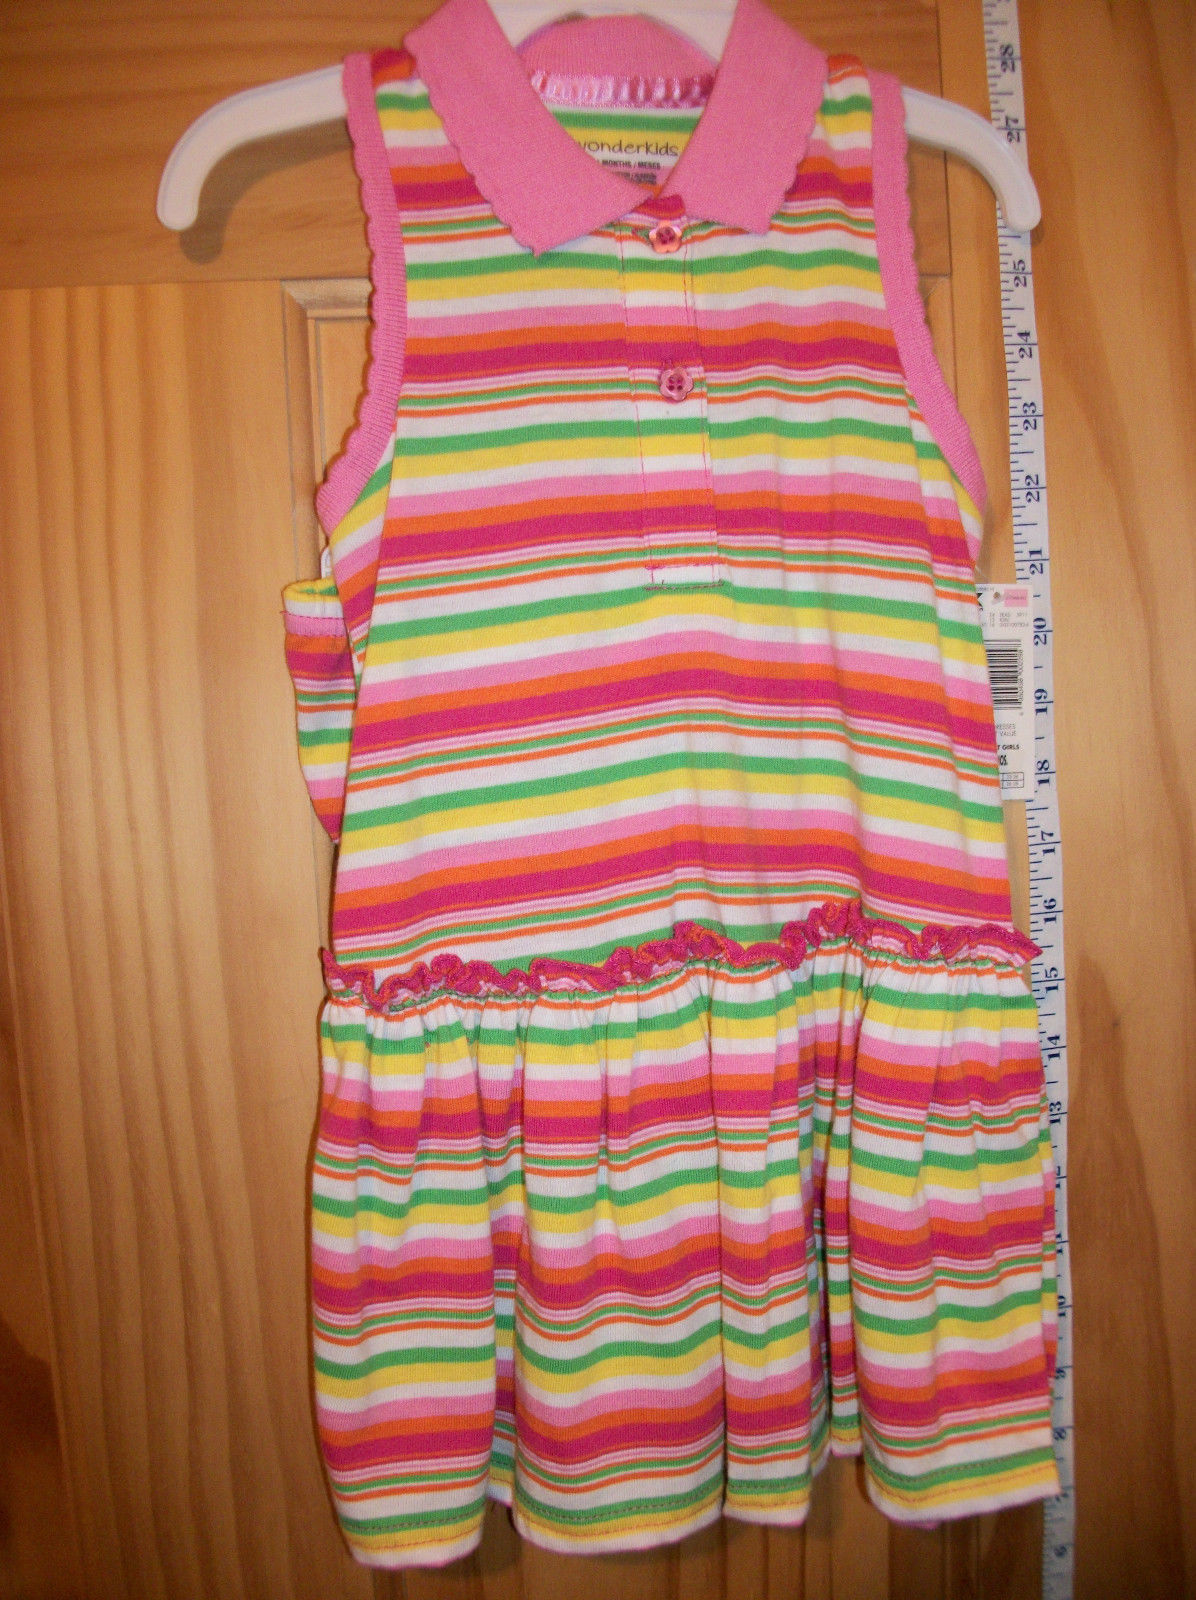 Wonder Kids Baby Clothes 18M Infant Girl Outfit Panty Pink Stripe Dress 2 Pc Set - $14.24